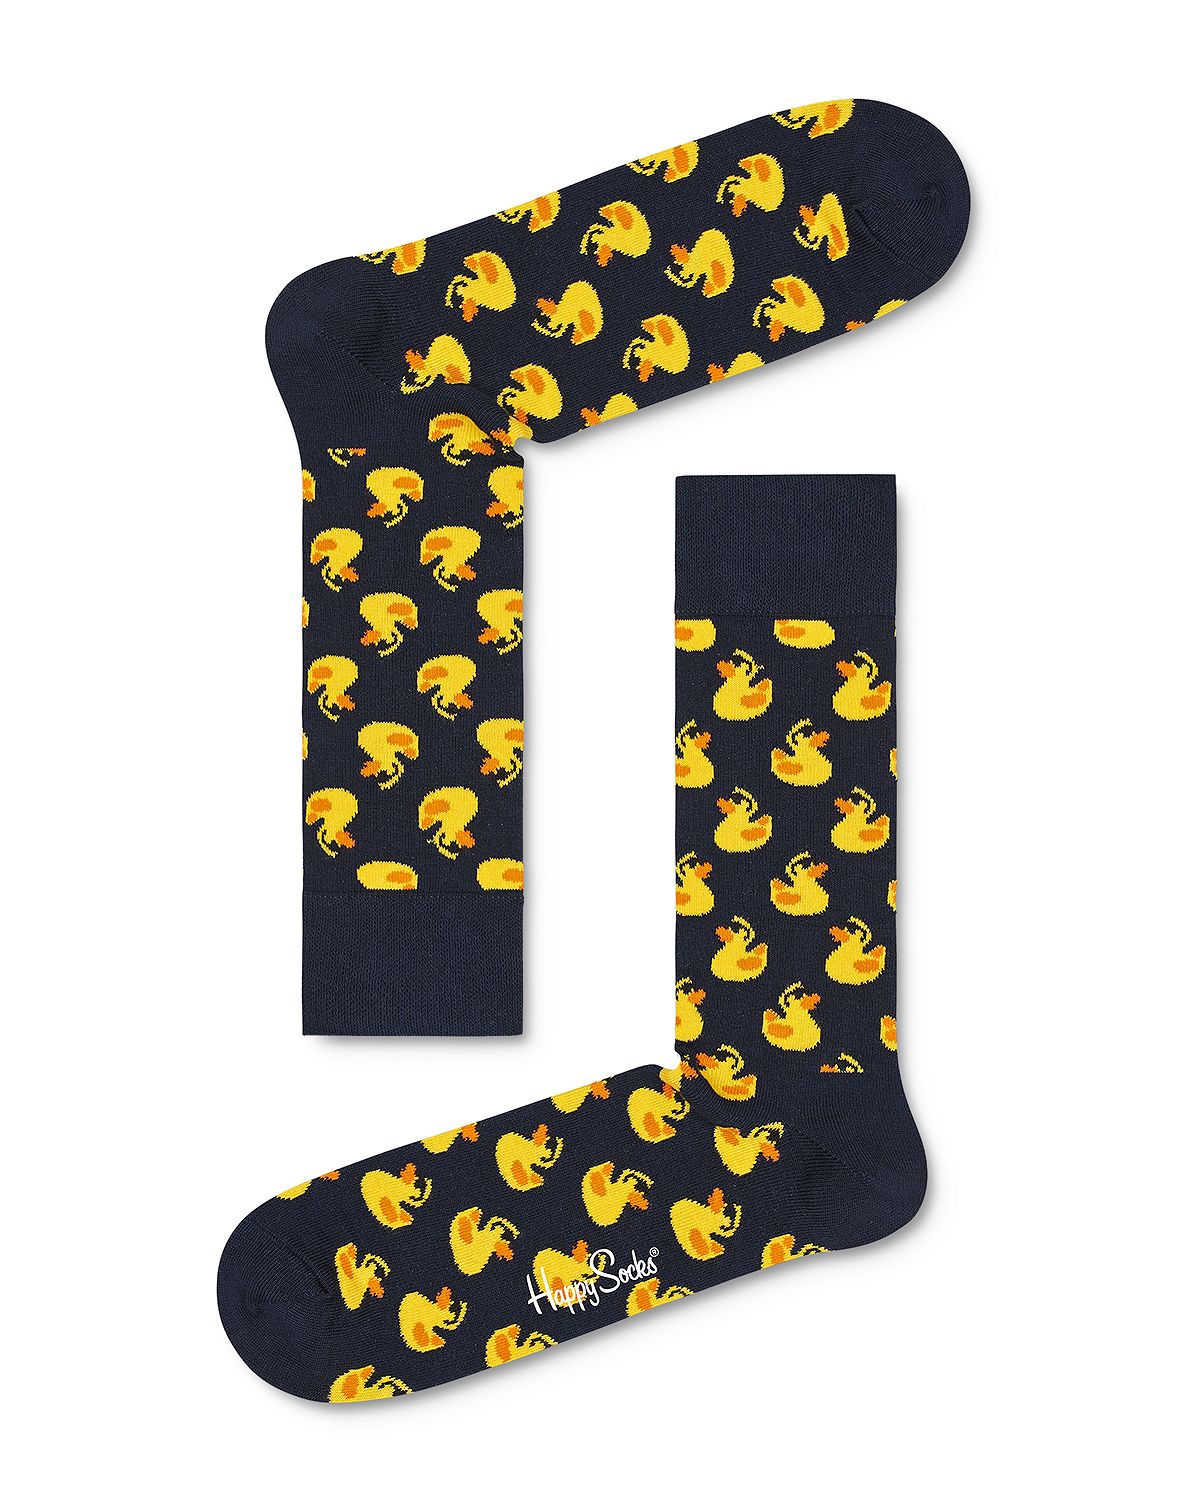 Happy Socks Rubber Ducks Crew Socks Blue/Yellow